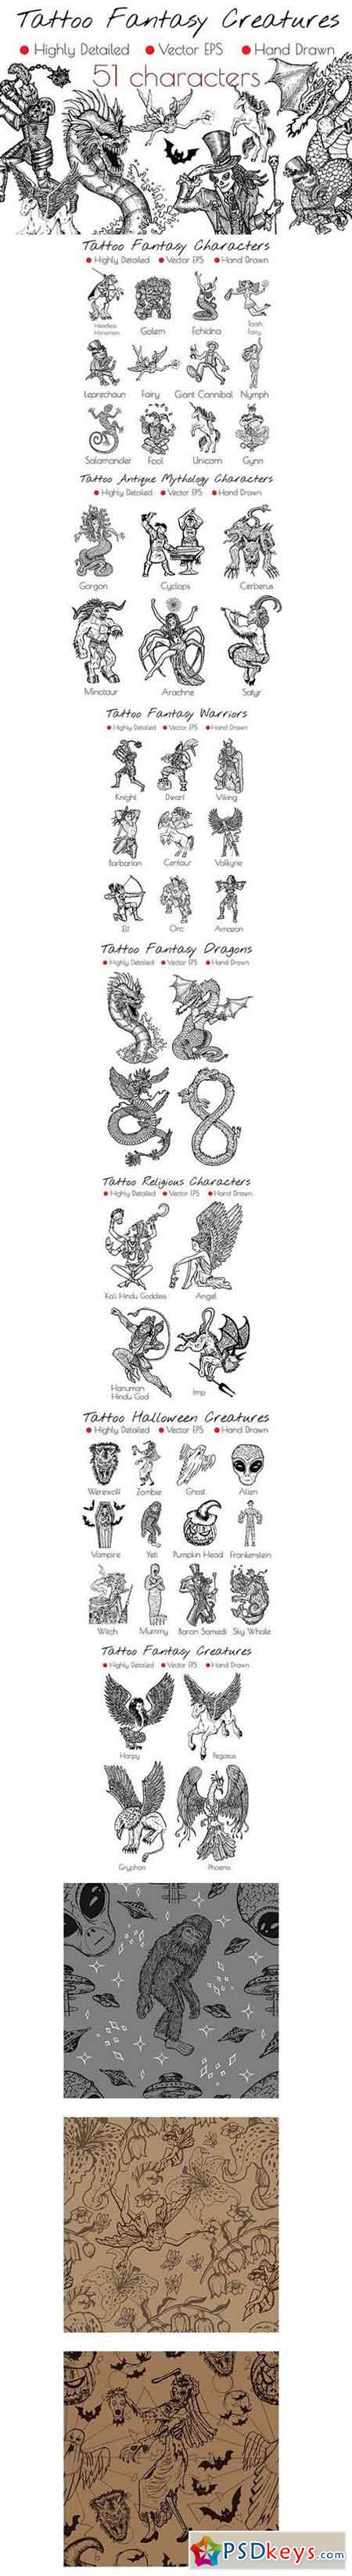 Tattoo Fantasy Characters 1412858